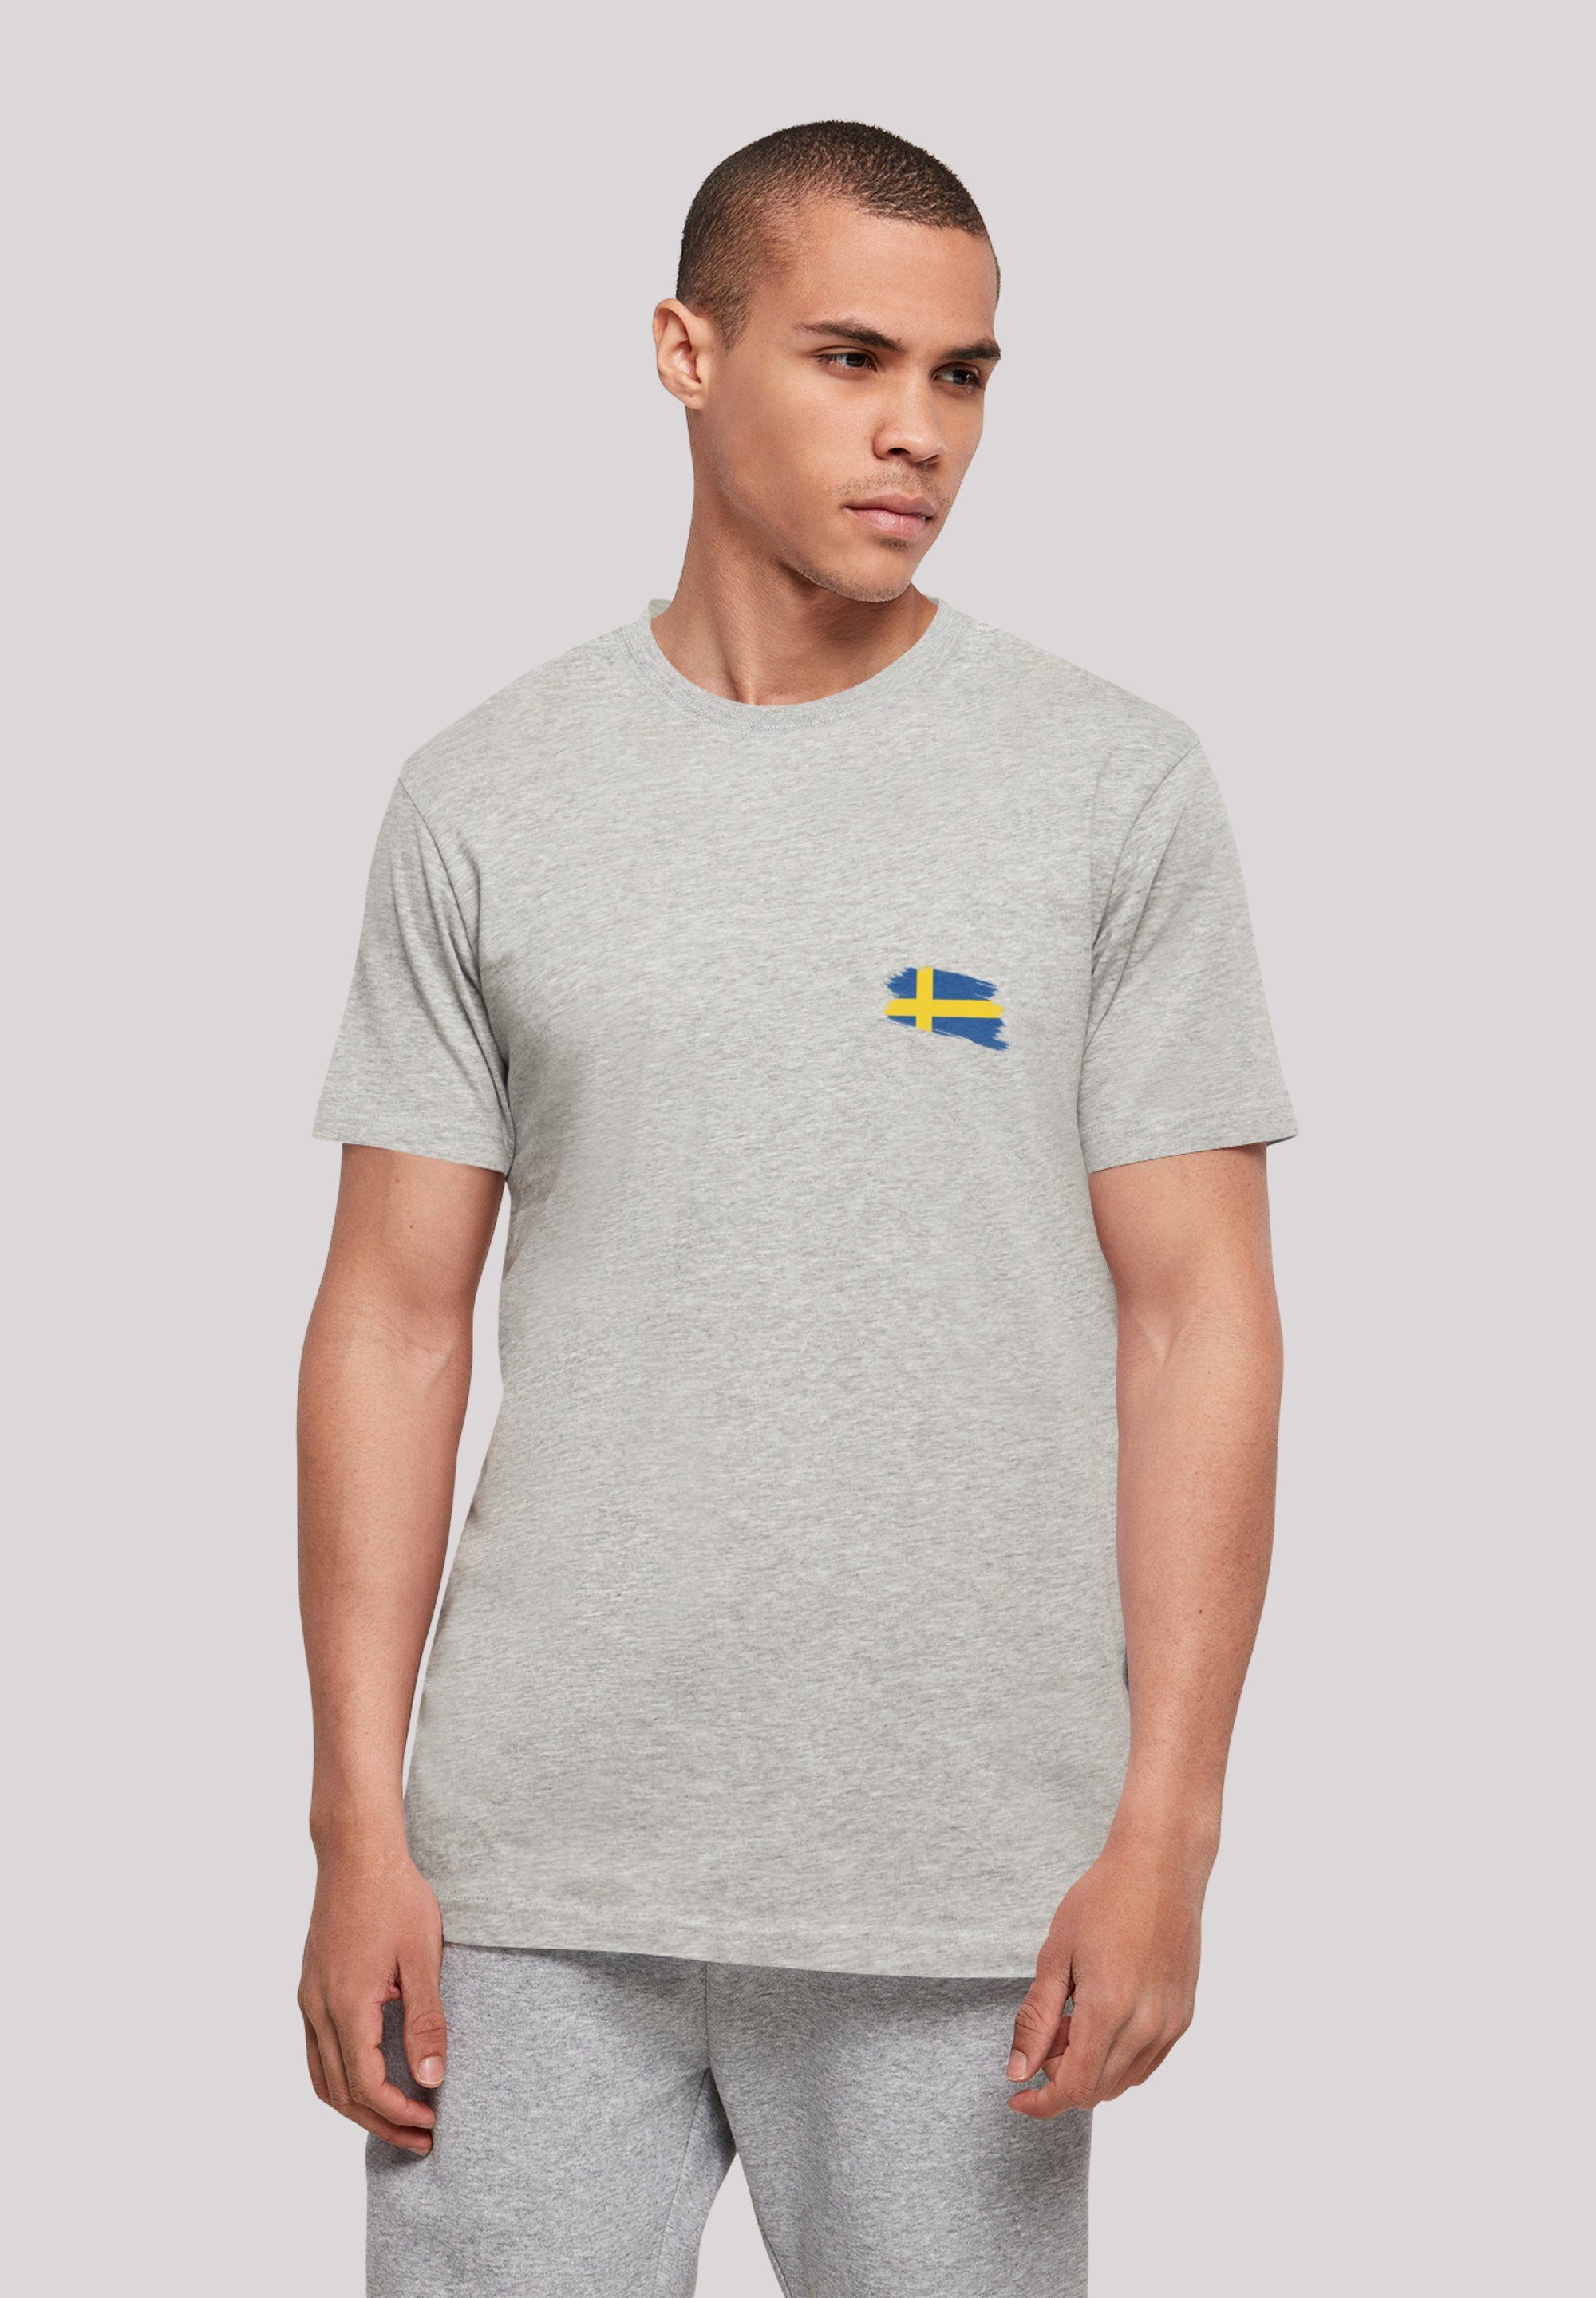 F4NT4STIC T-Shirt Schweden Flagge Sweden Print heather grey | T-Shirts